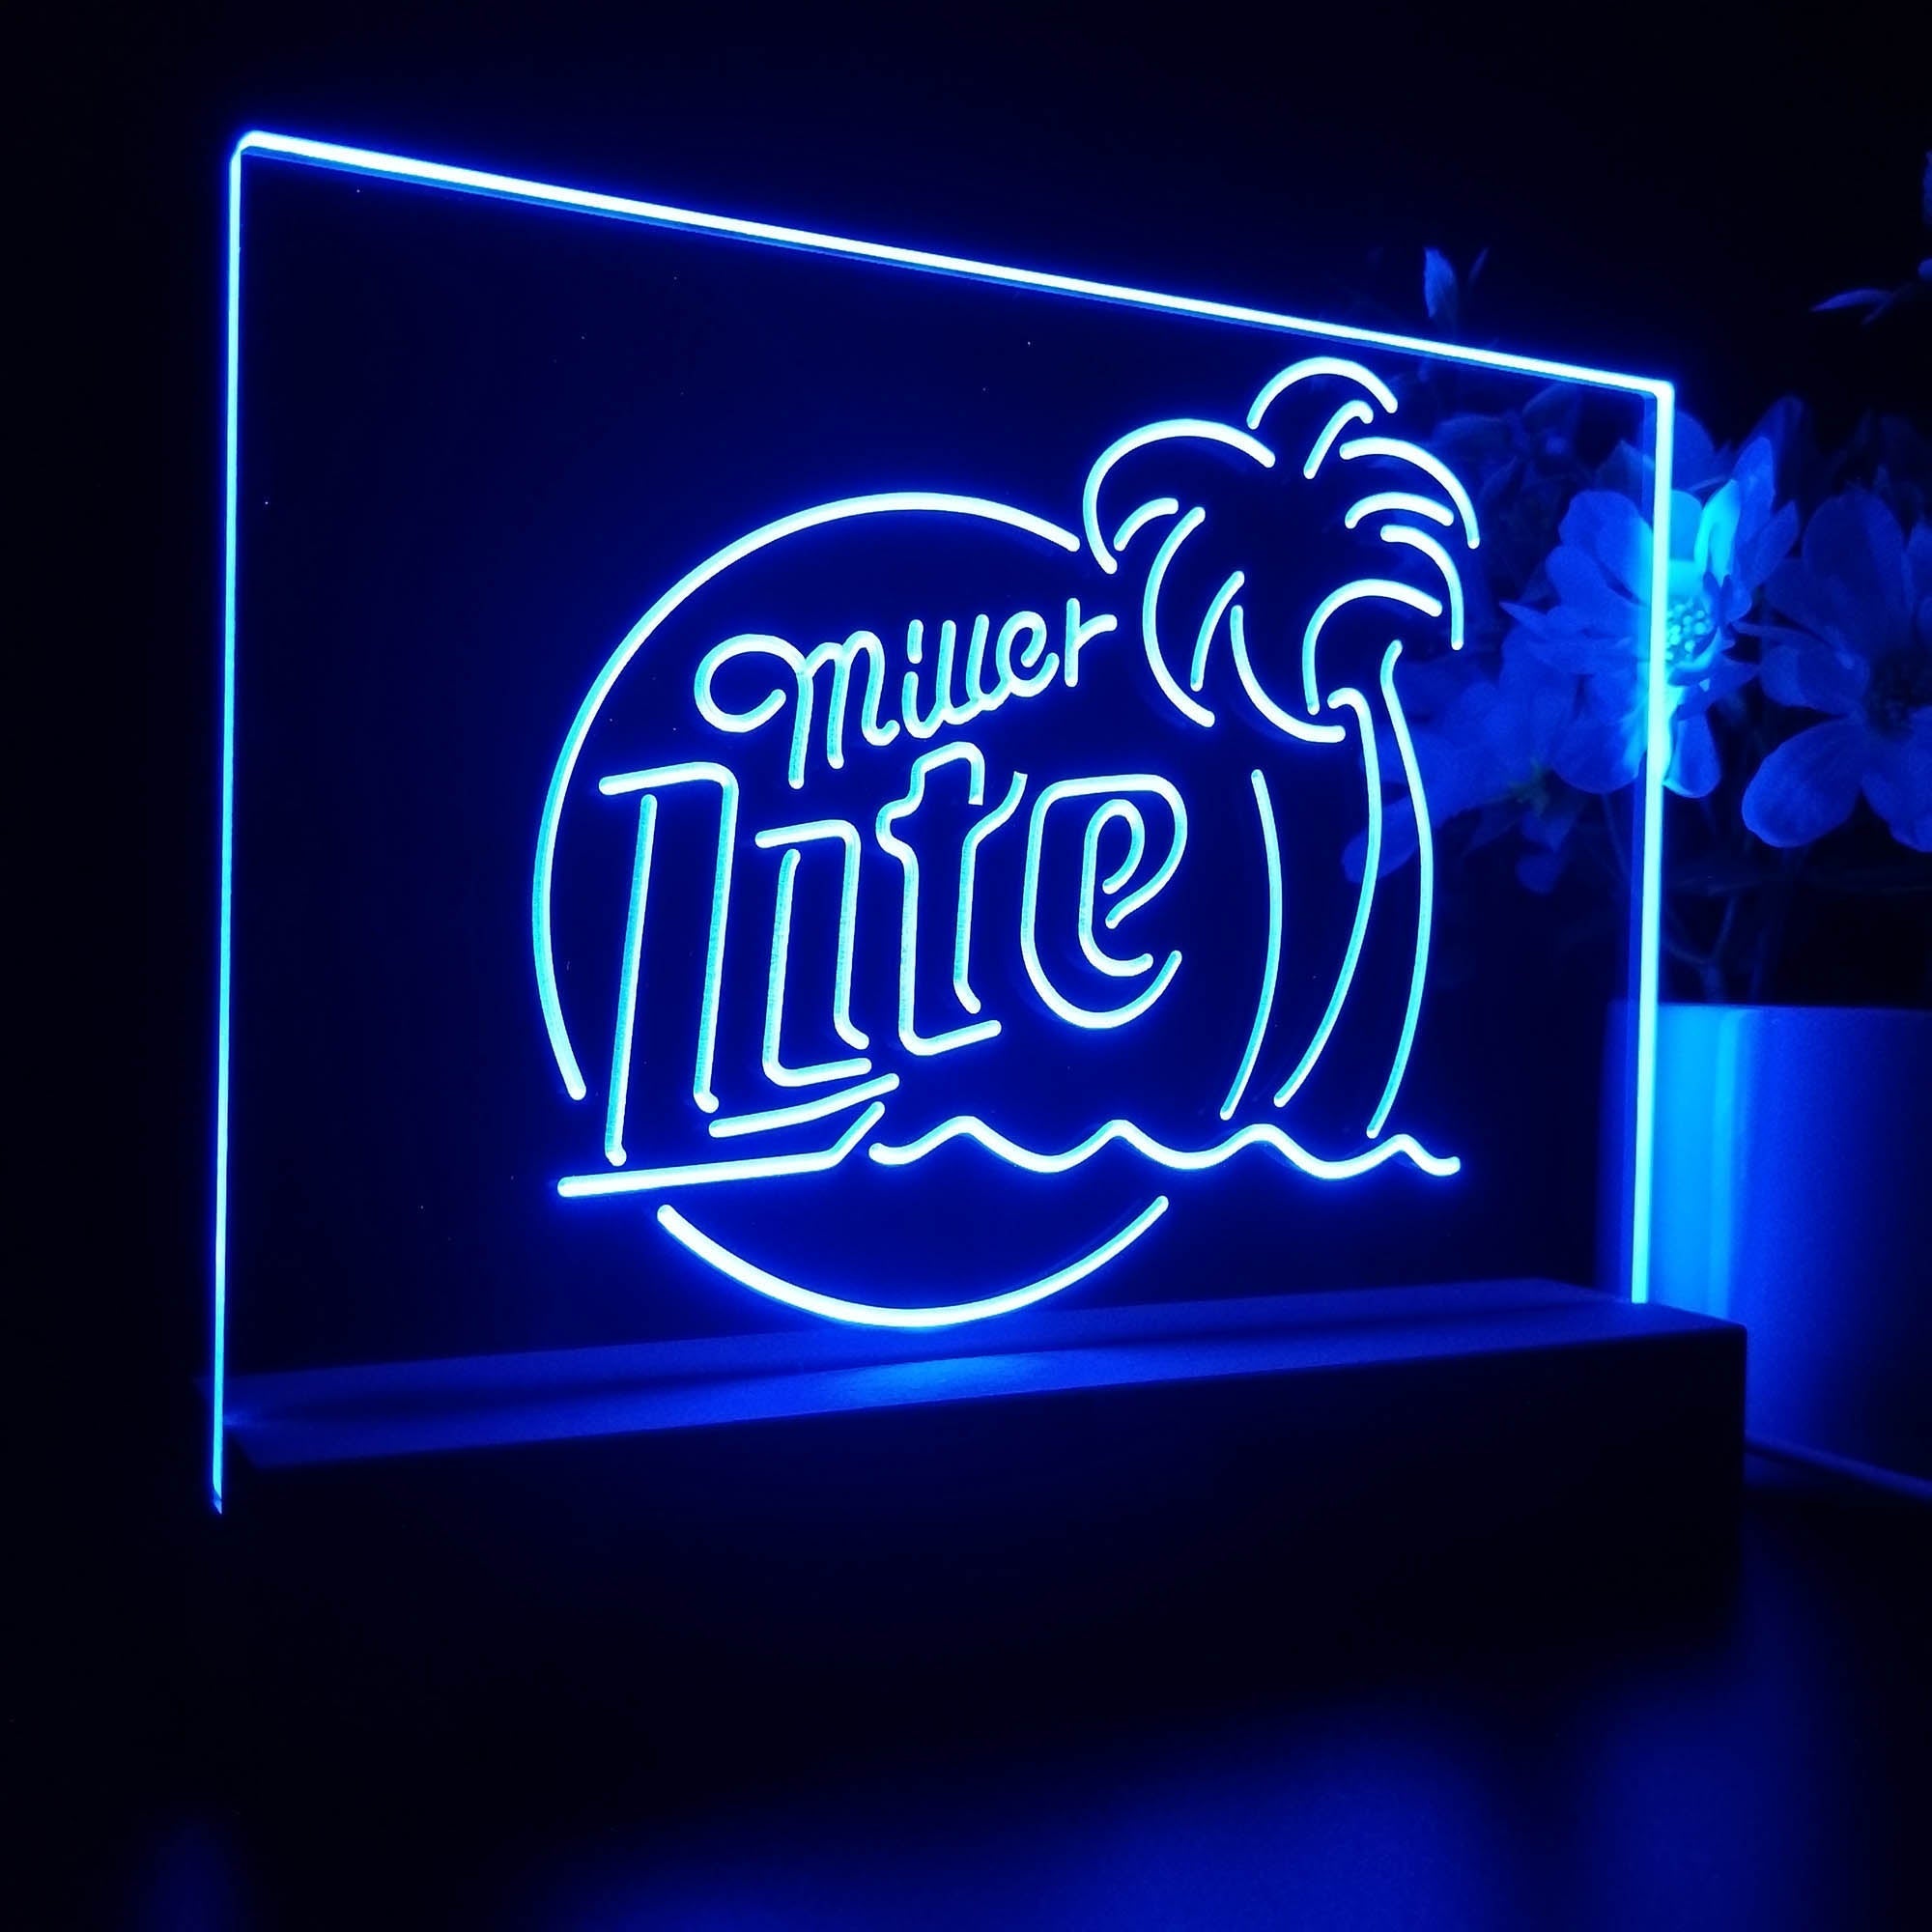 Miller Palm Tree Neon Sign Pub Bar Lamp